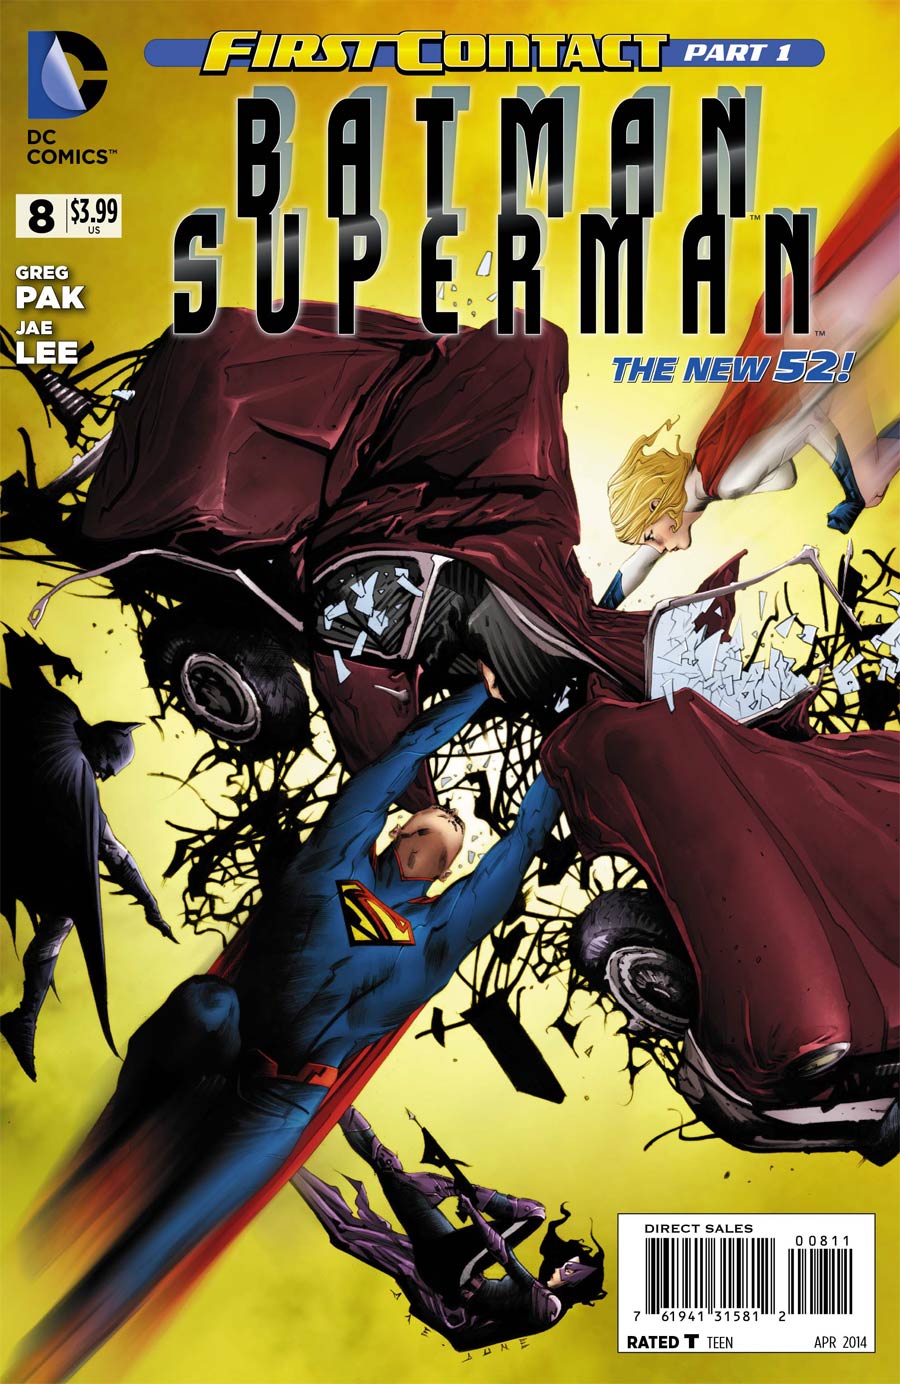 Batman Superman #8 Cover A Regular Jae Lee Cover (First Contact Part 1)